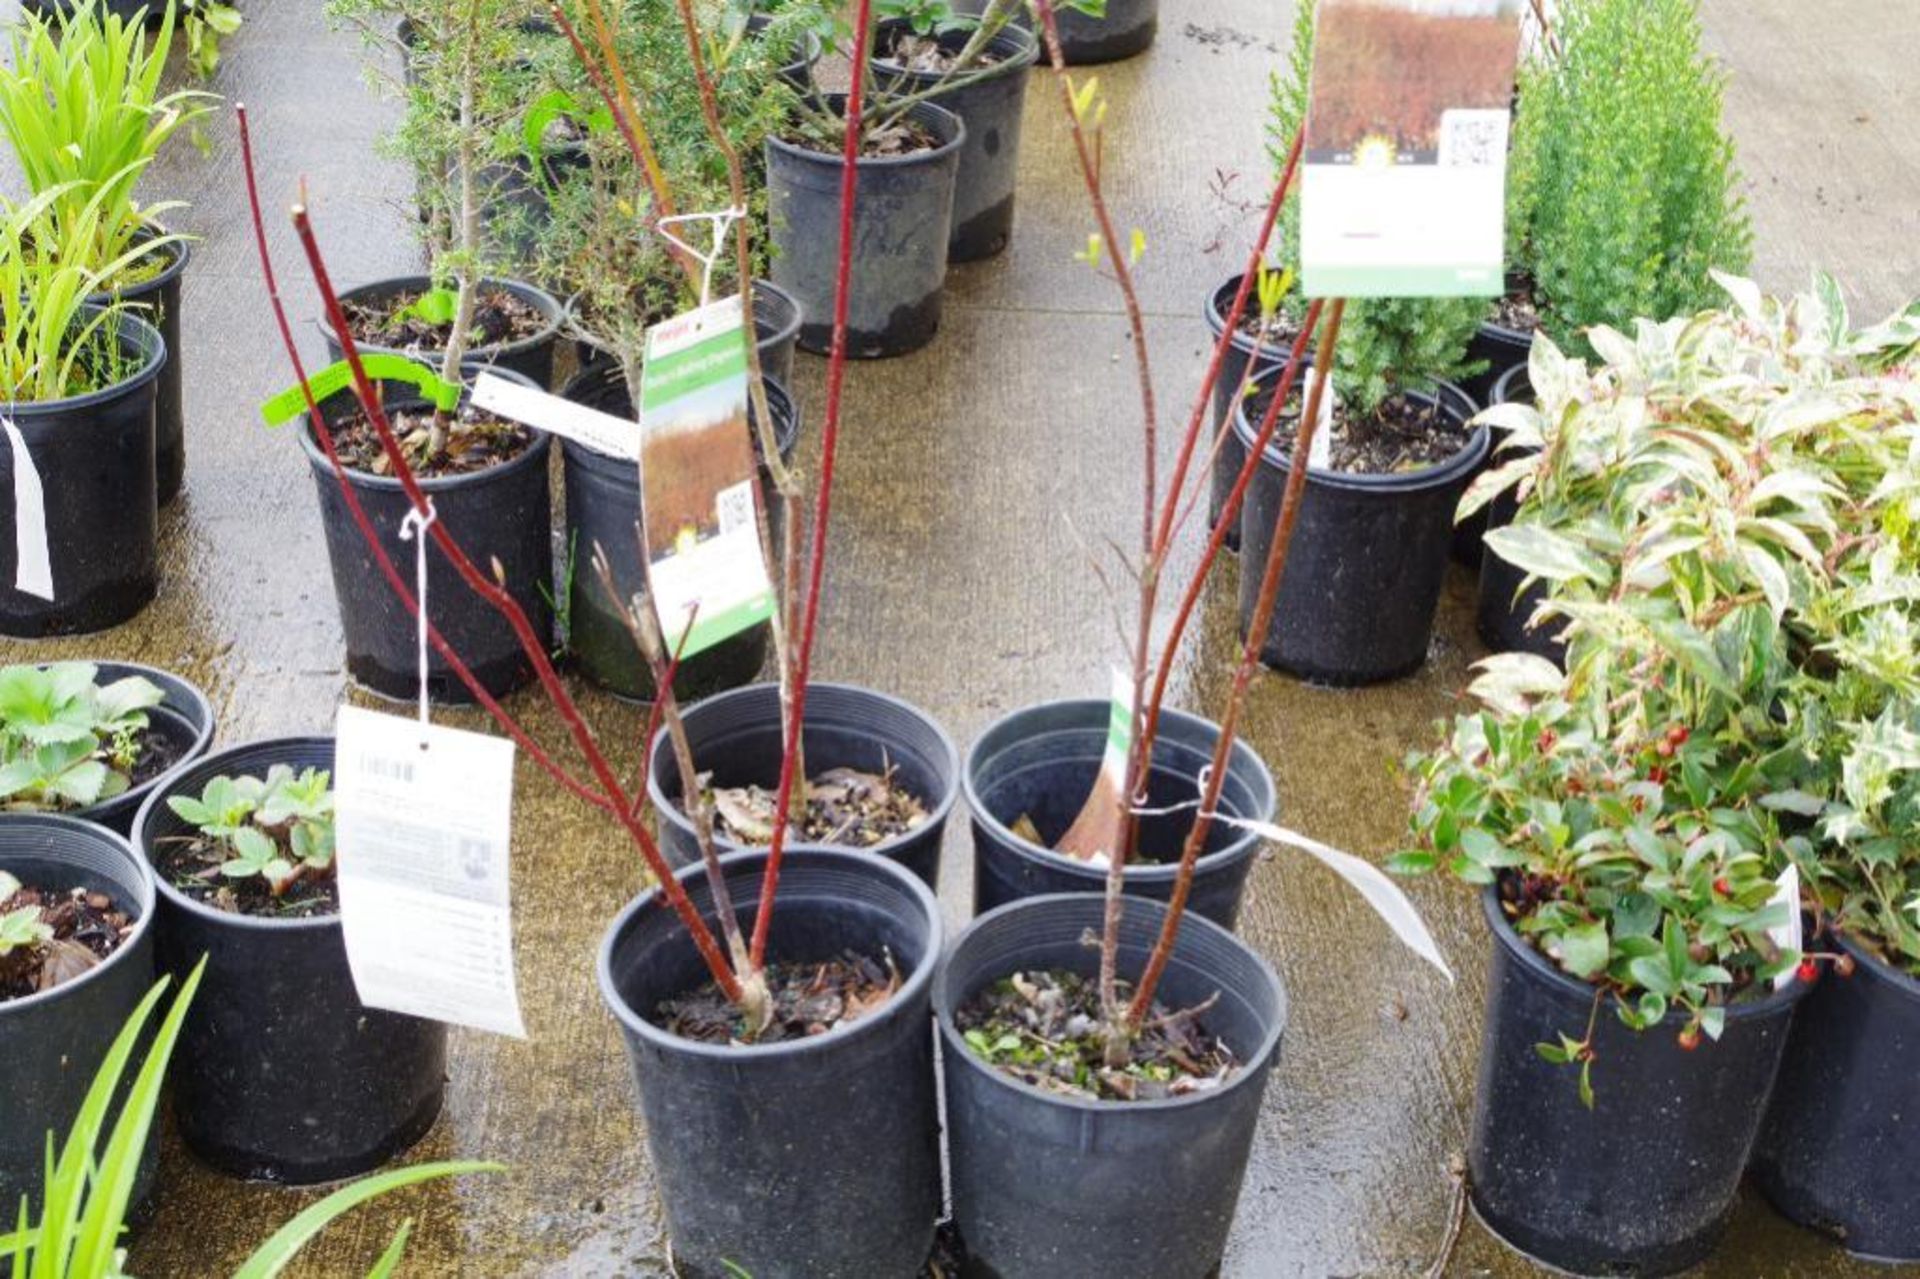 (4) Bailey's Redtwig Dogwood Plants